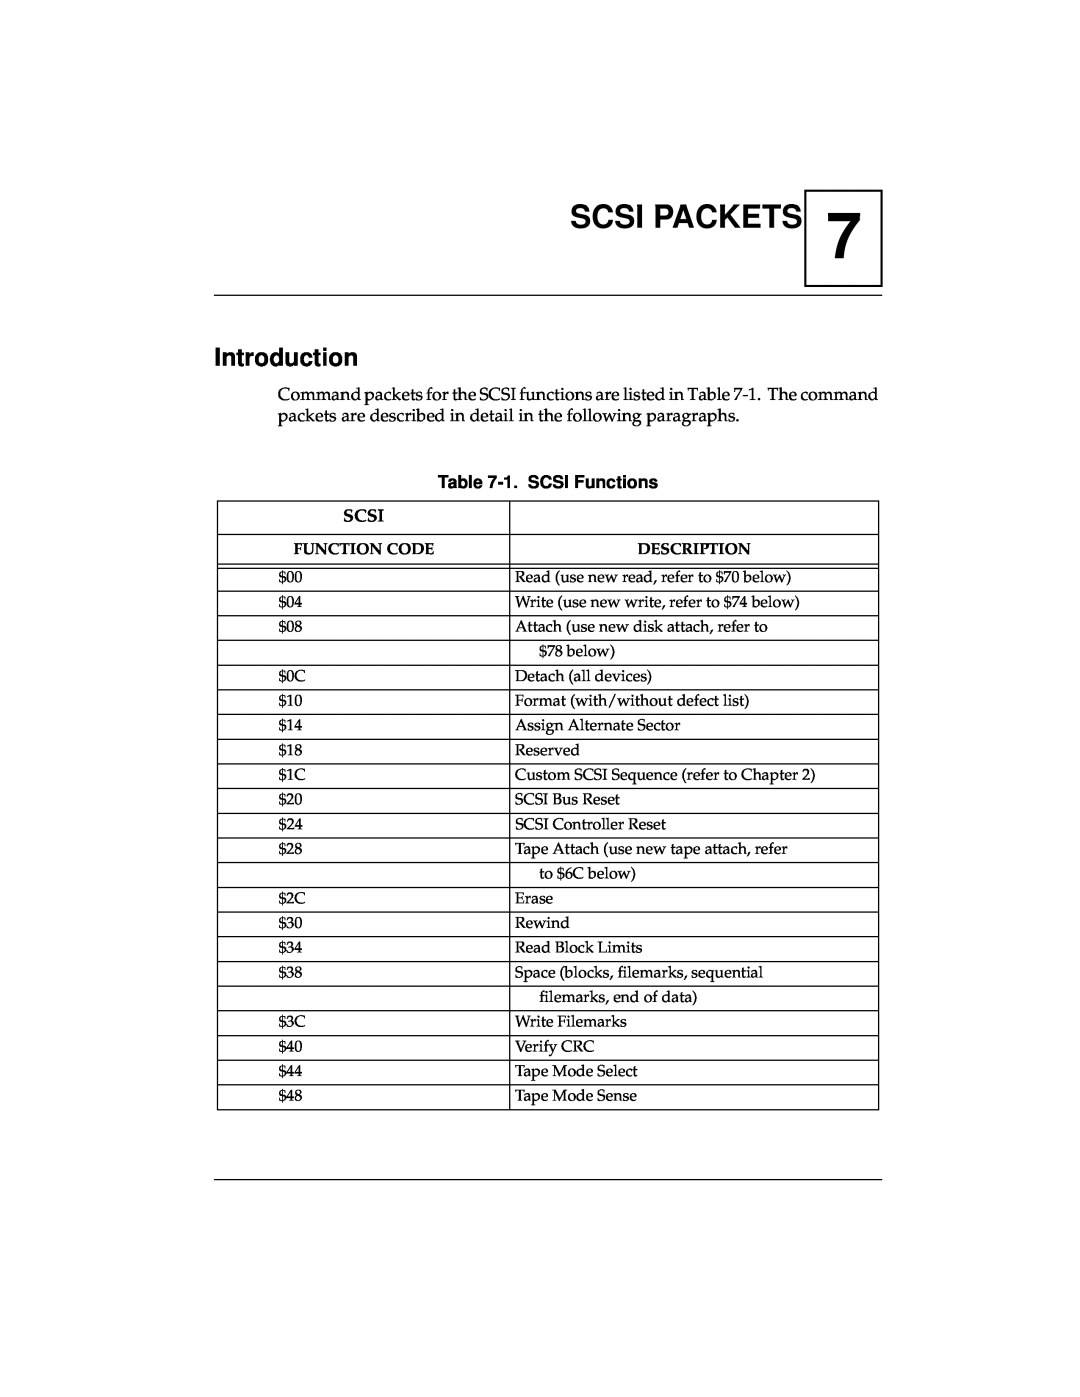 Emerson MVME147 manual Scsi Packets, 1.SCSI Functions, Introduction, Function Code, Description 